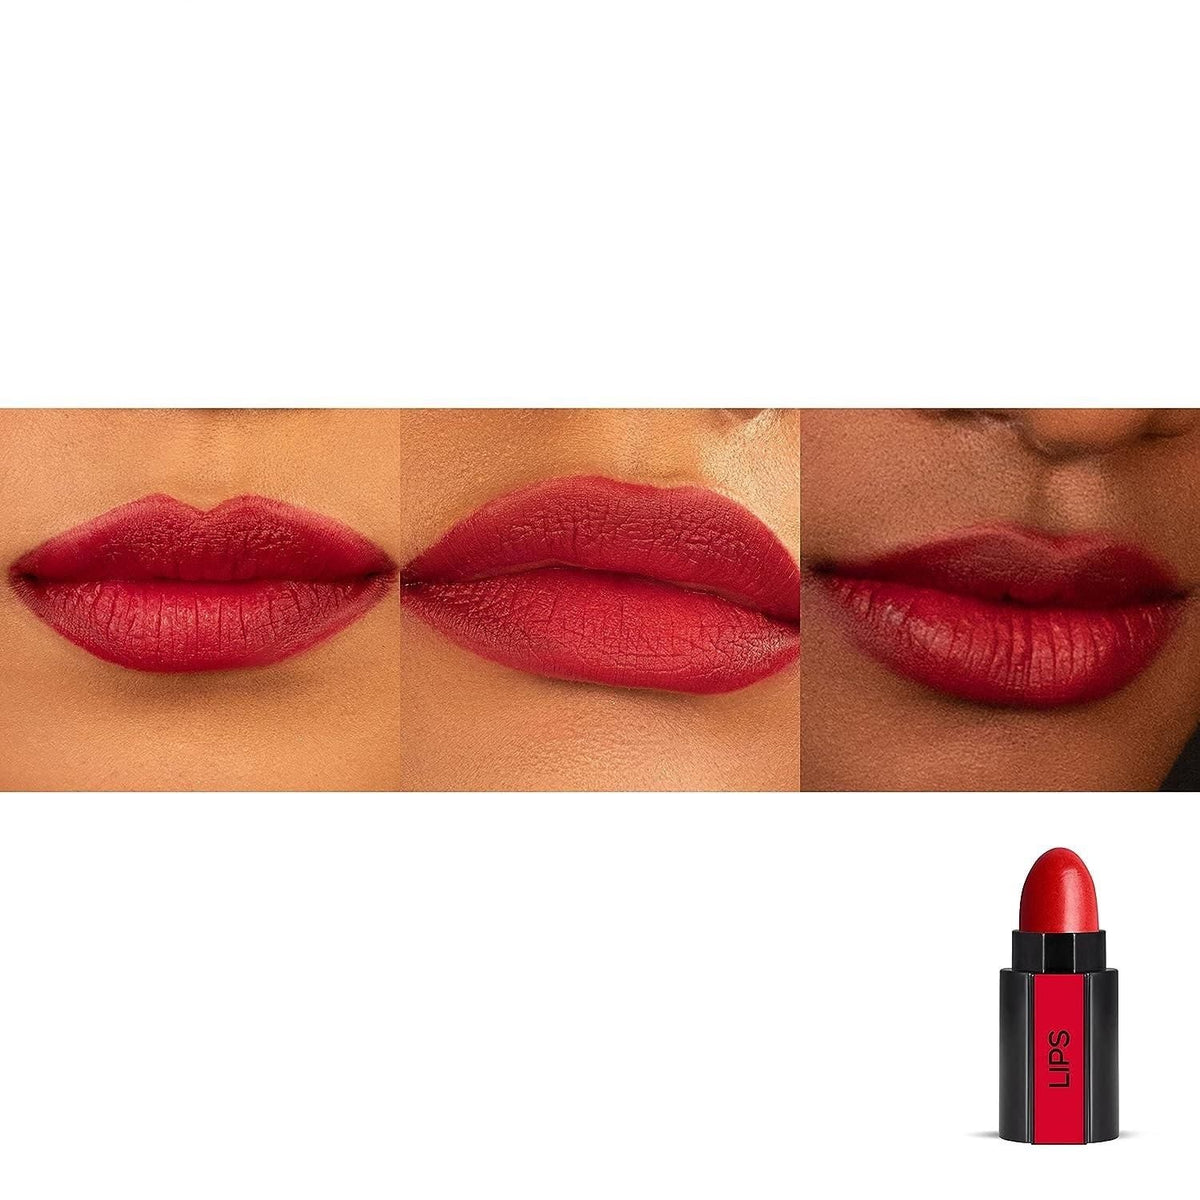 3 In 1 Makeup(Lipstick) Stick